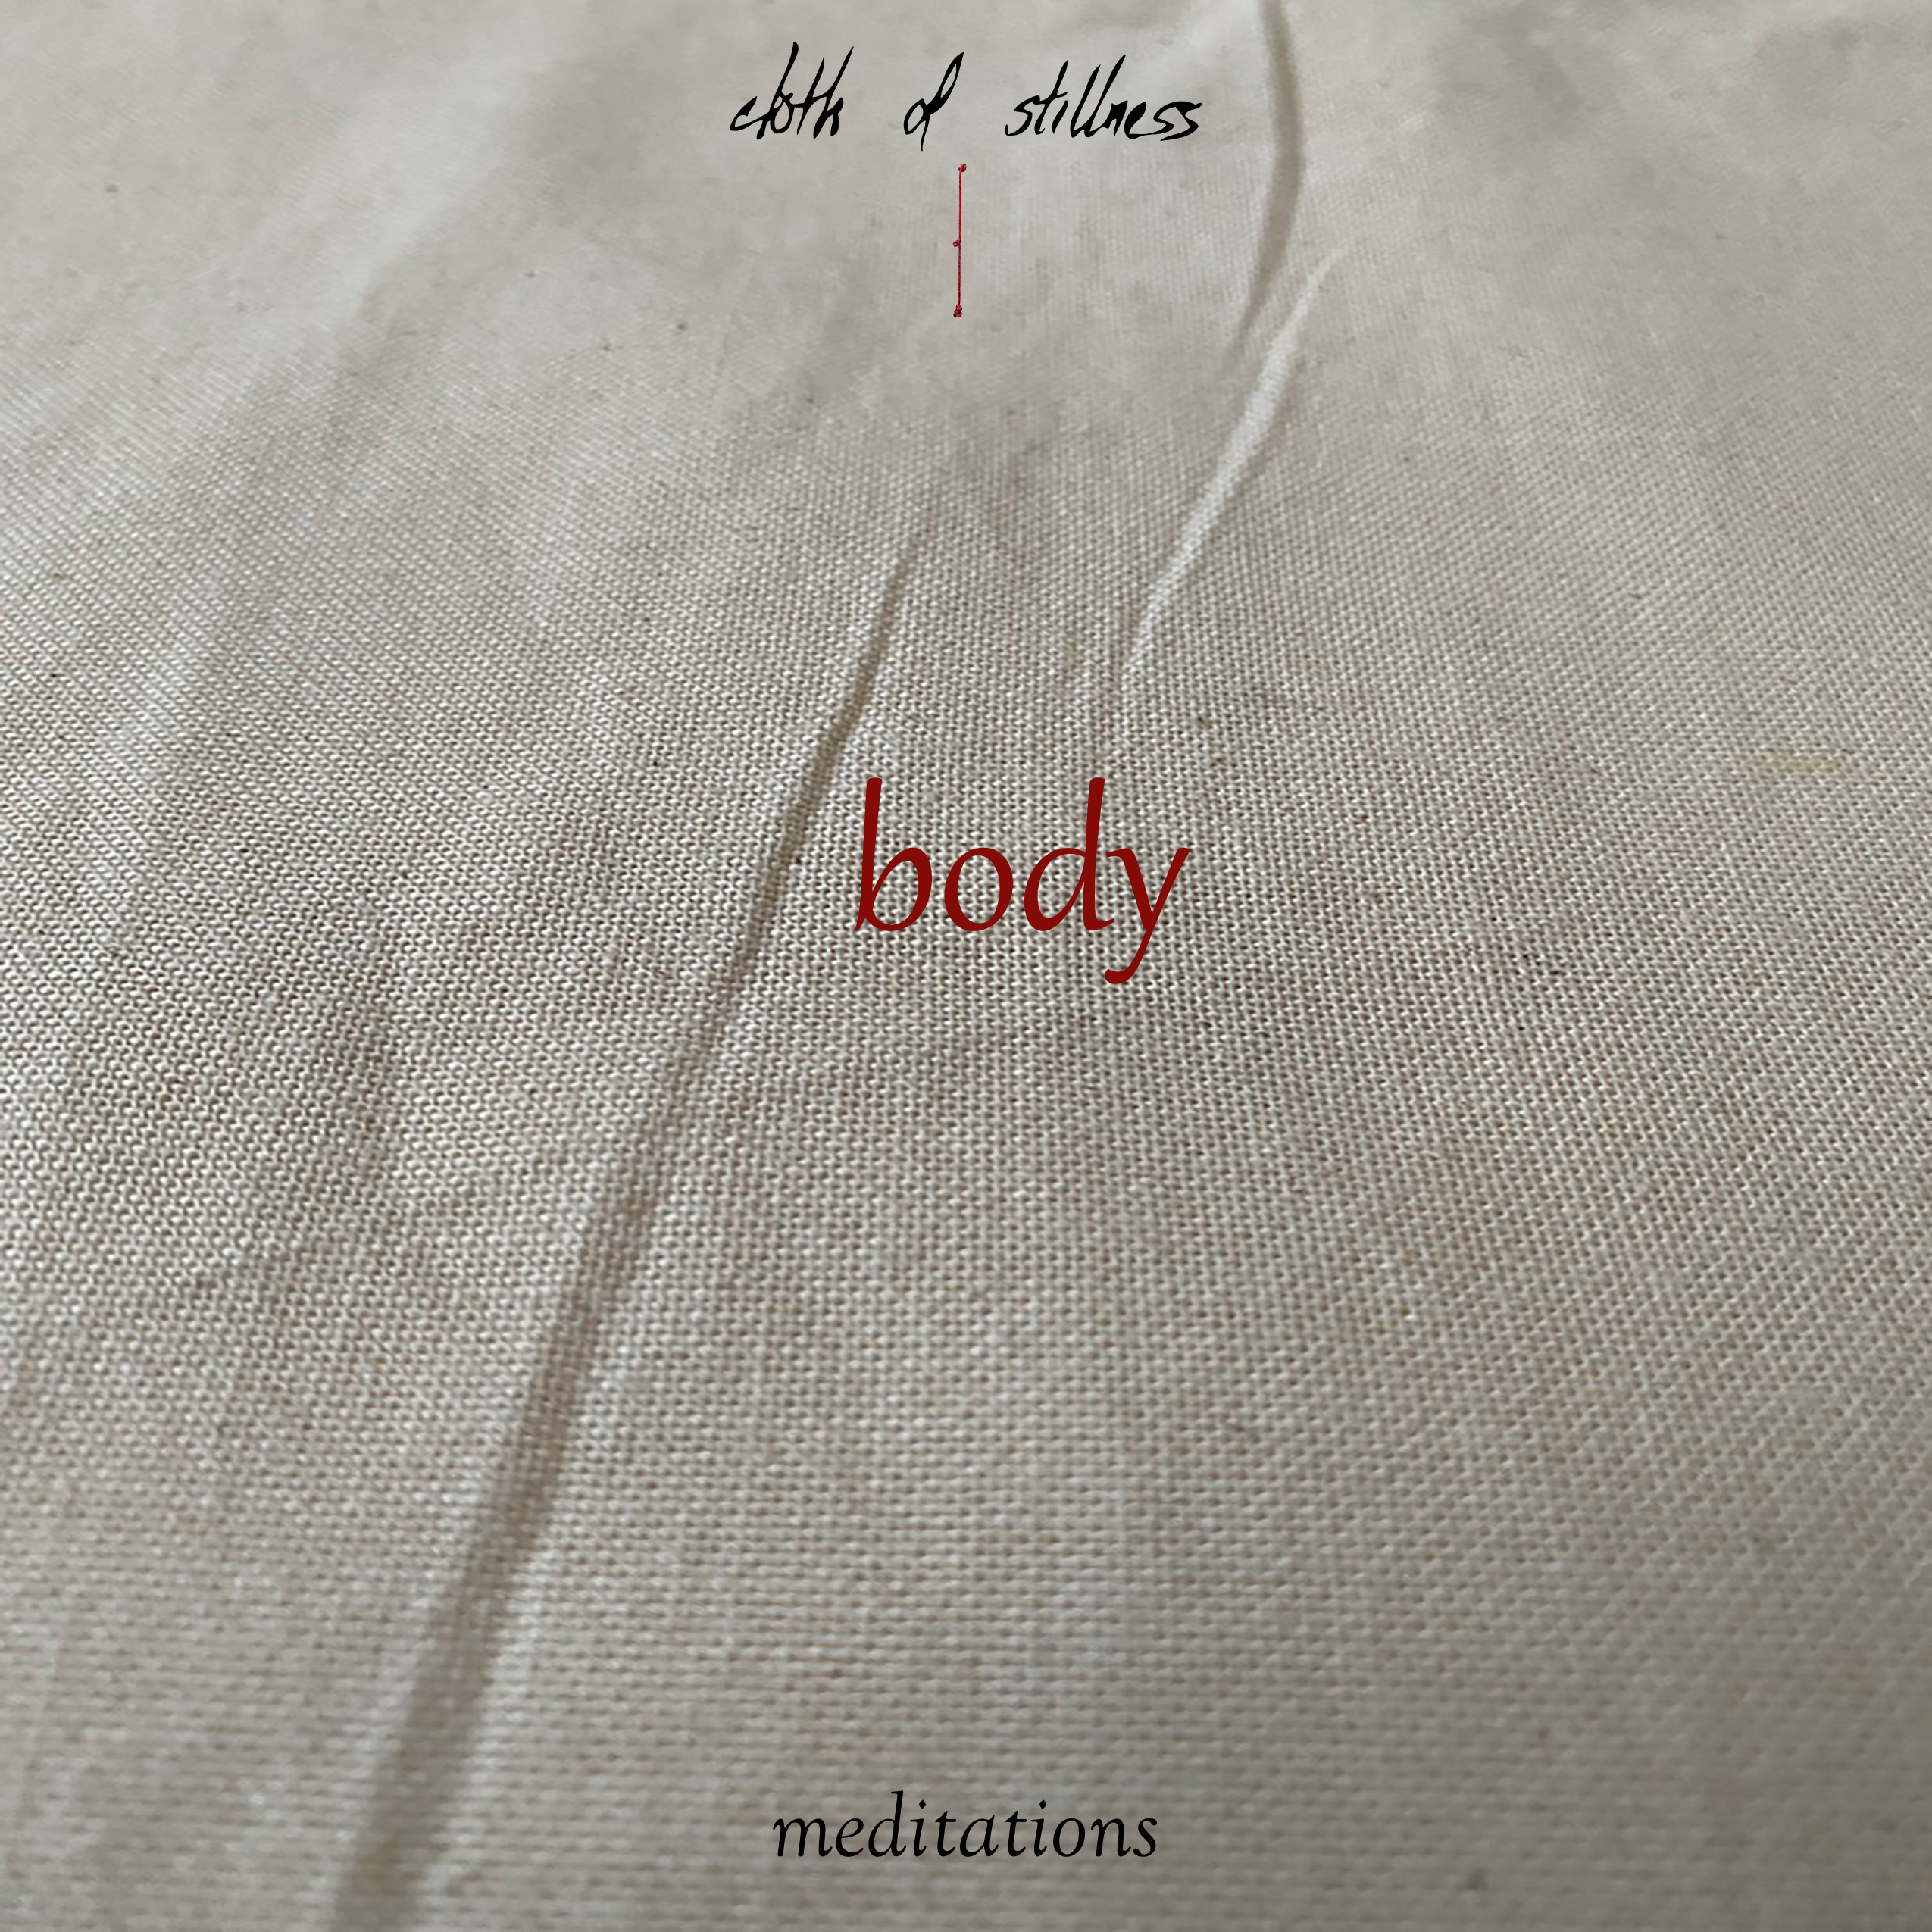 cloth of stillness meditations by kien chu...body...10...1.13.2021...ready to buy